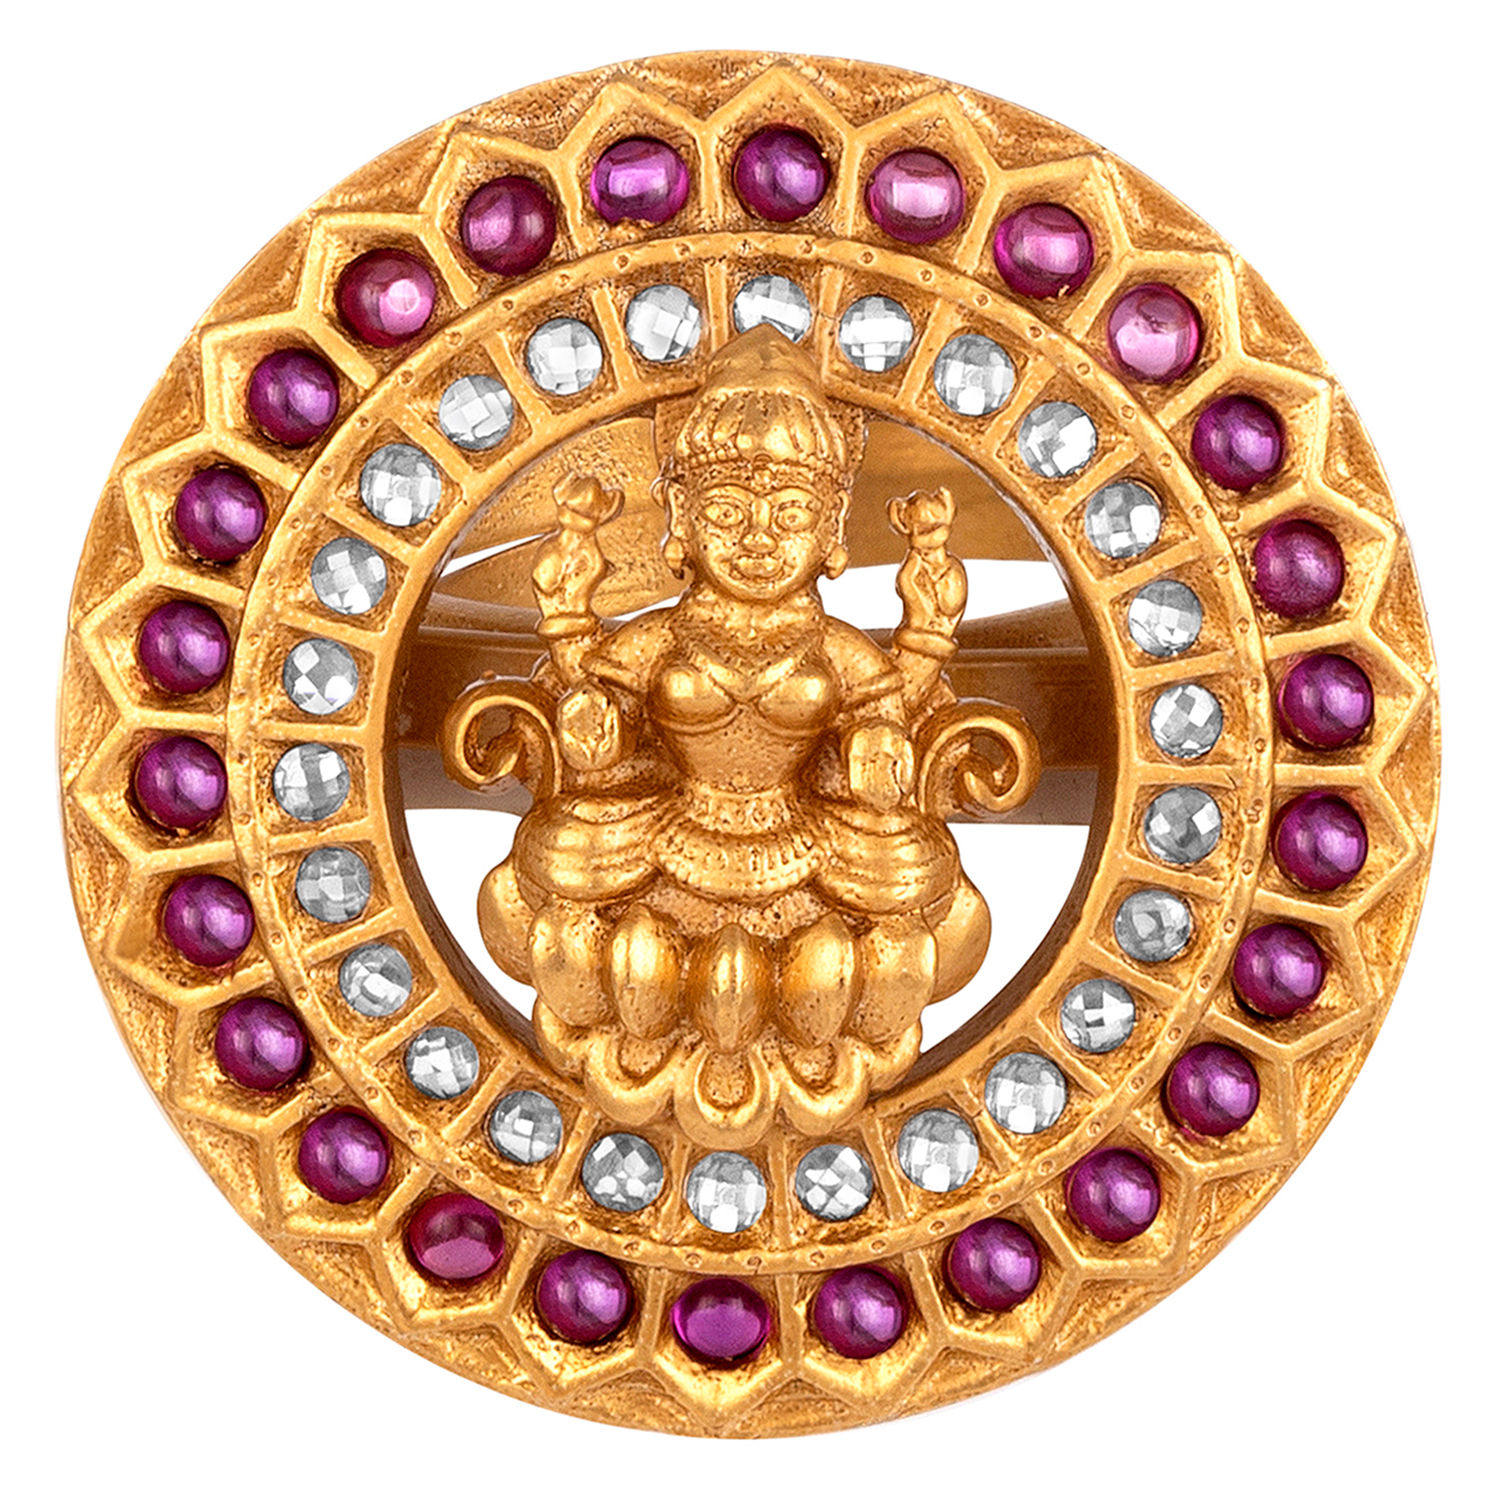 Hindu Goddess Ring, Hindu Ring, Hindu Jewelry, Hindu Deity Ring, Deity,  Lakshmi, Wife of Vishnu, Boho Jewelry, Boho Ring, Lotus Flower | Hindu rings,  Hindu jewelry, Boho rings